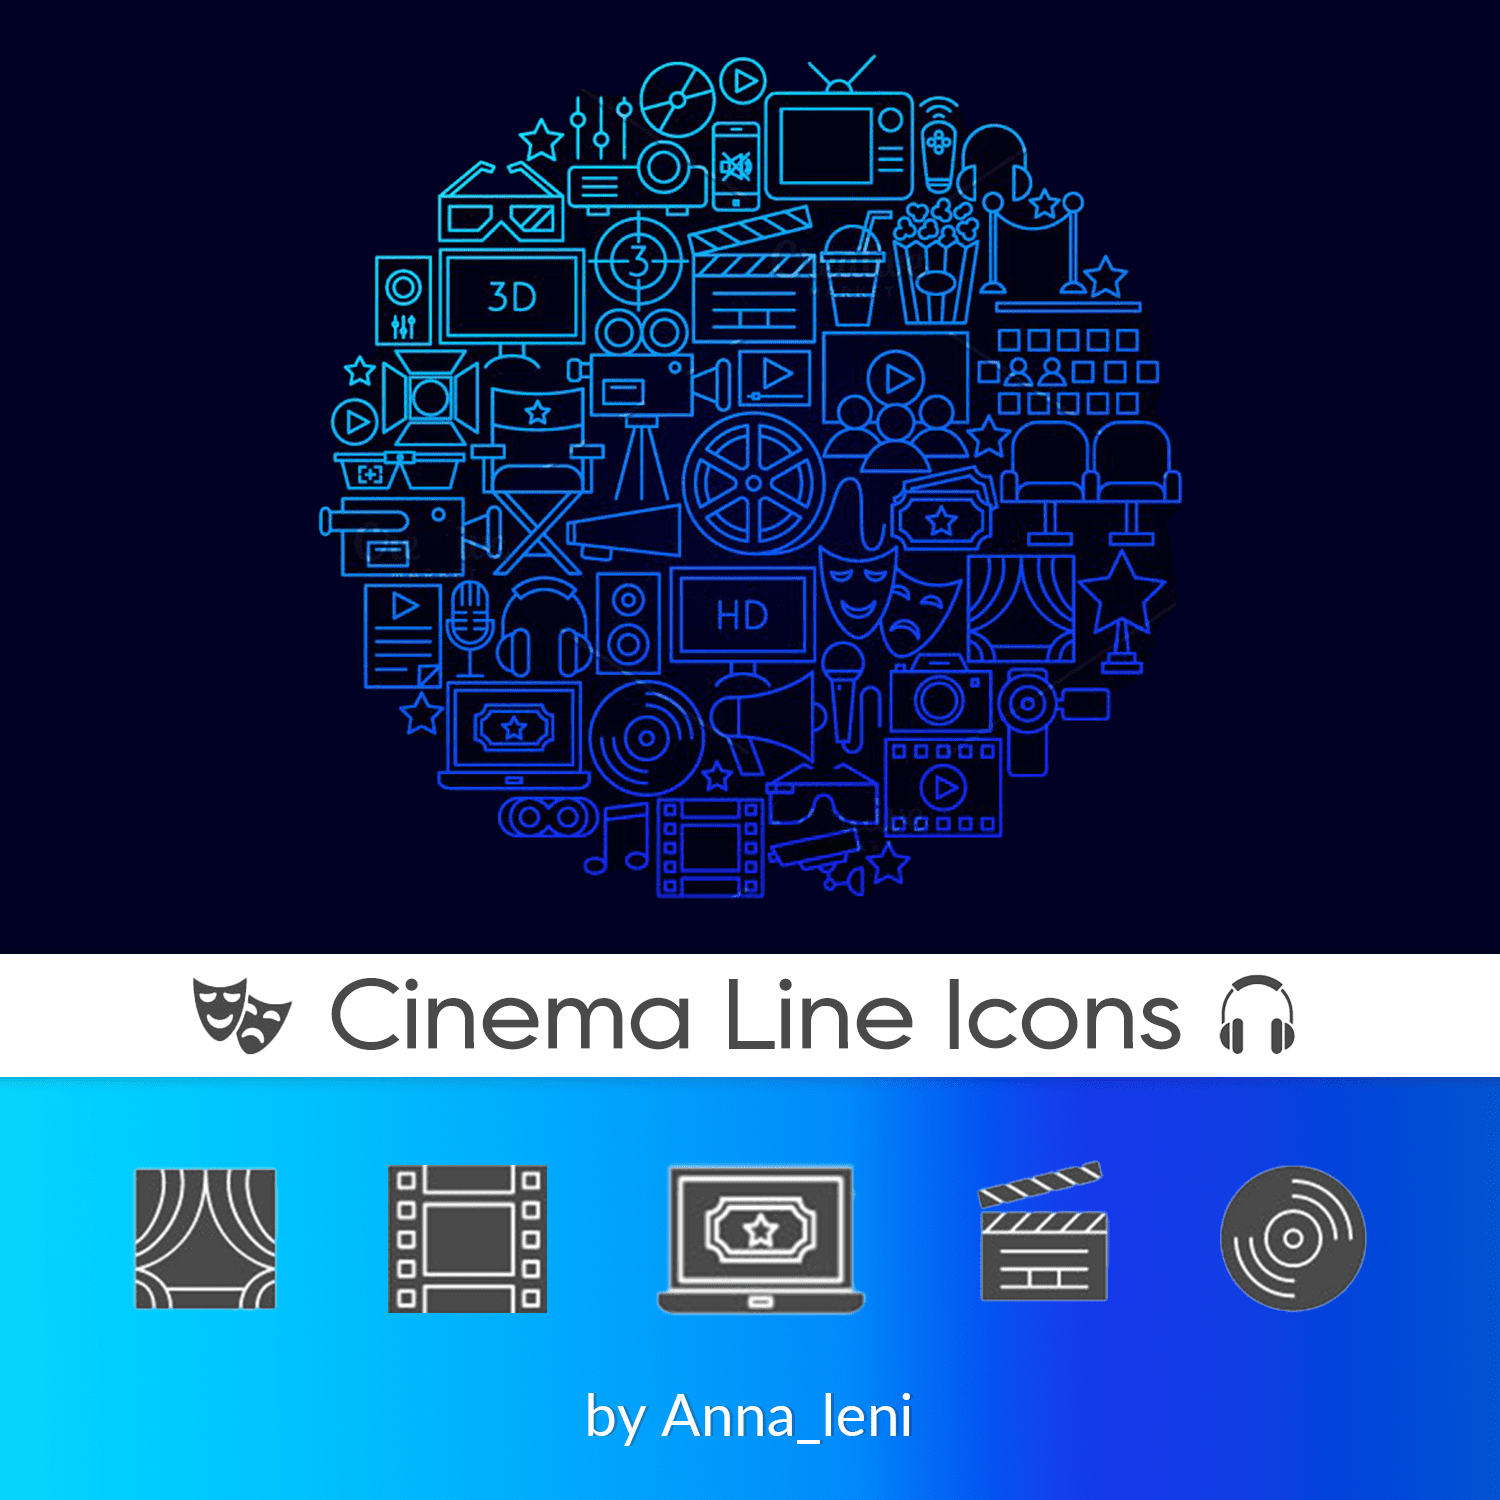 Cinema Line Icons cover.